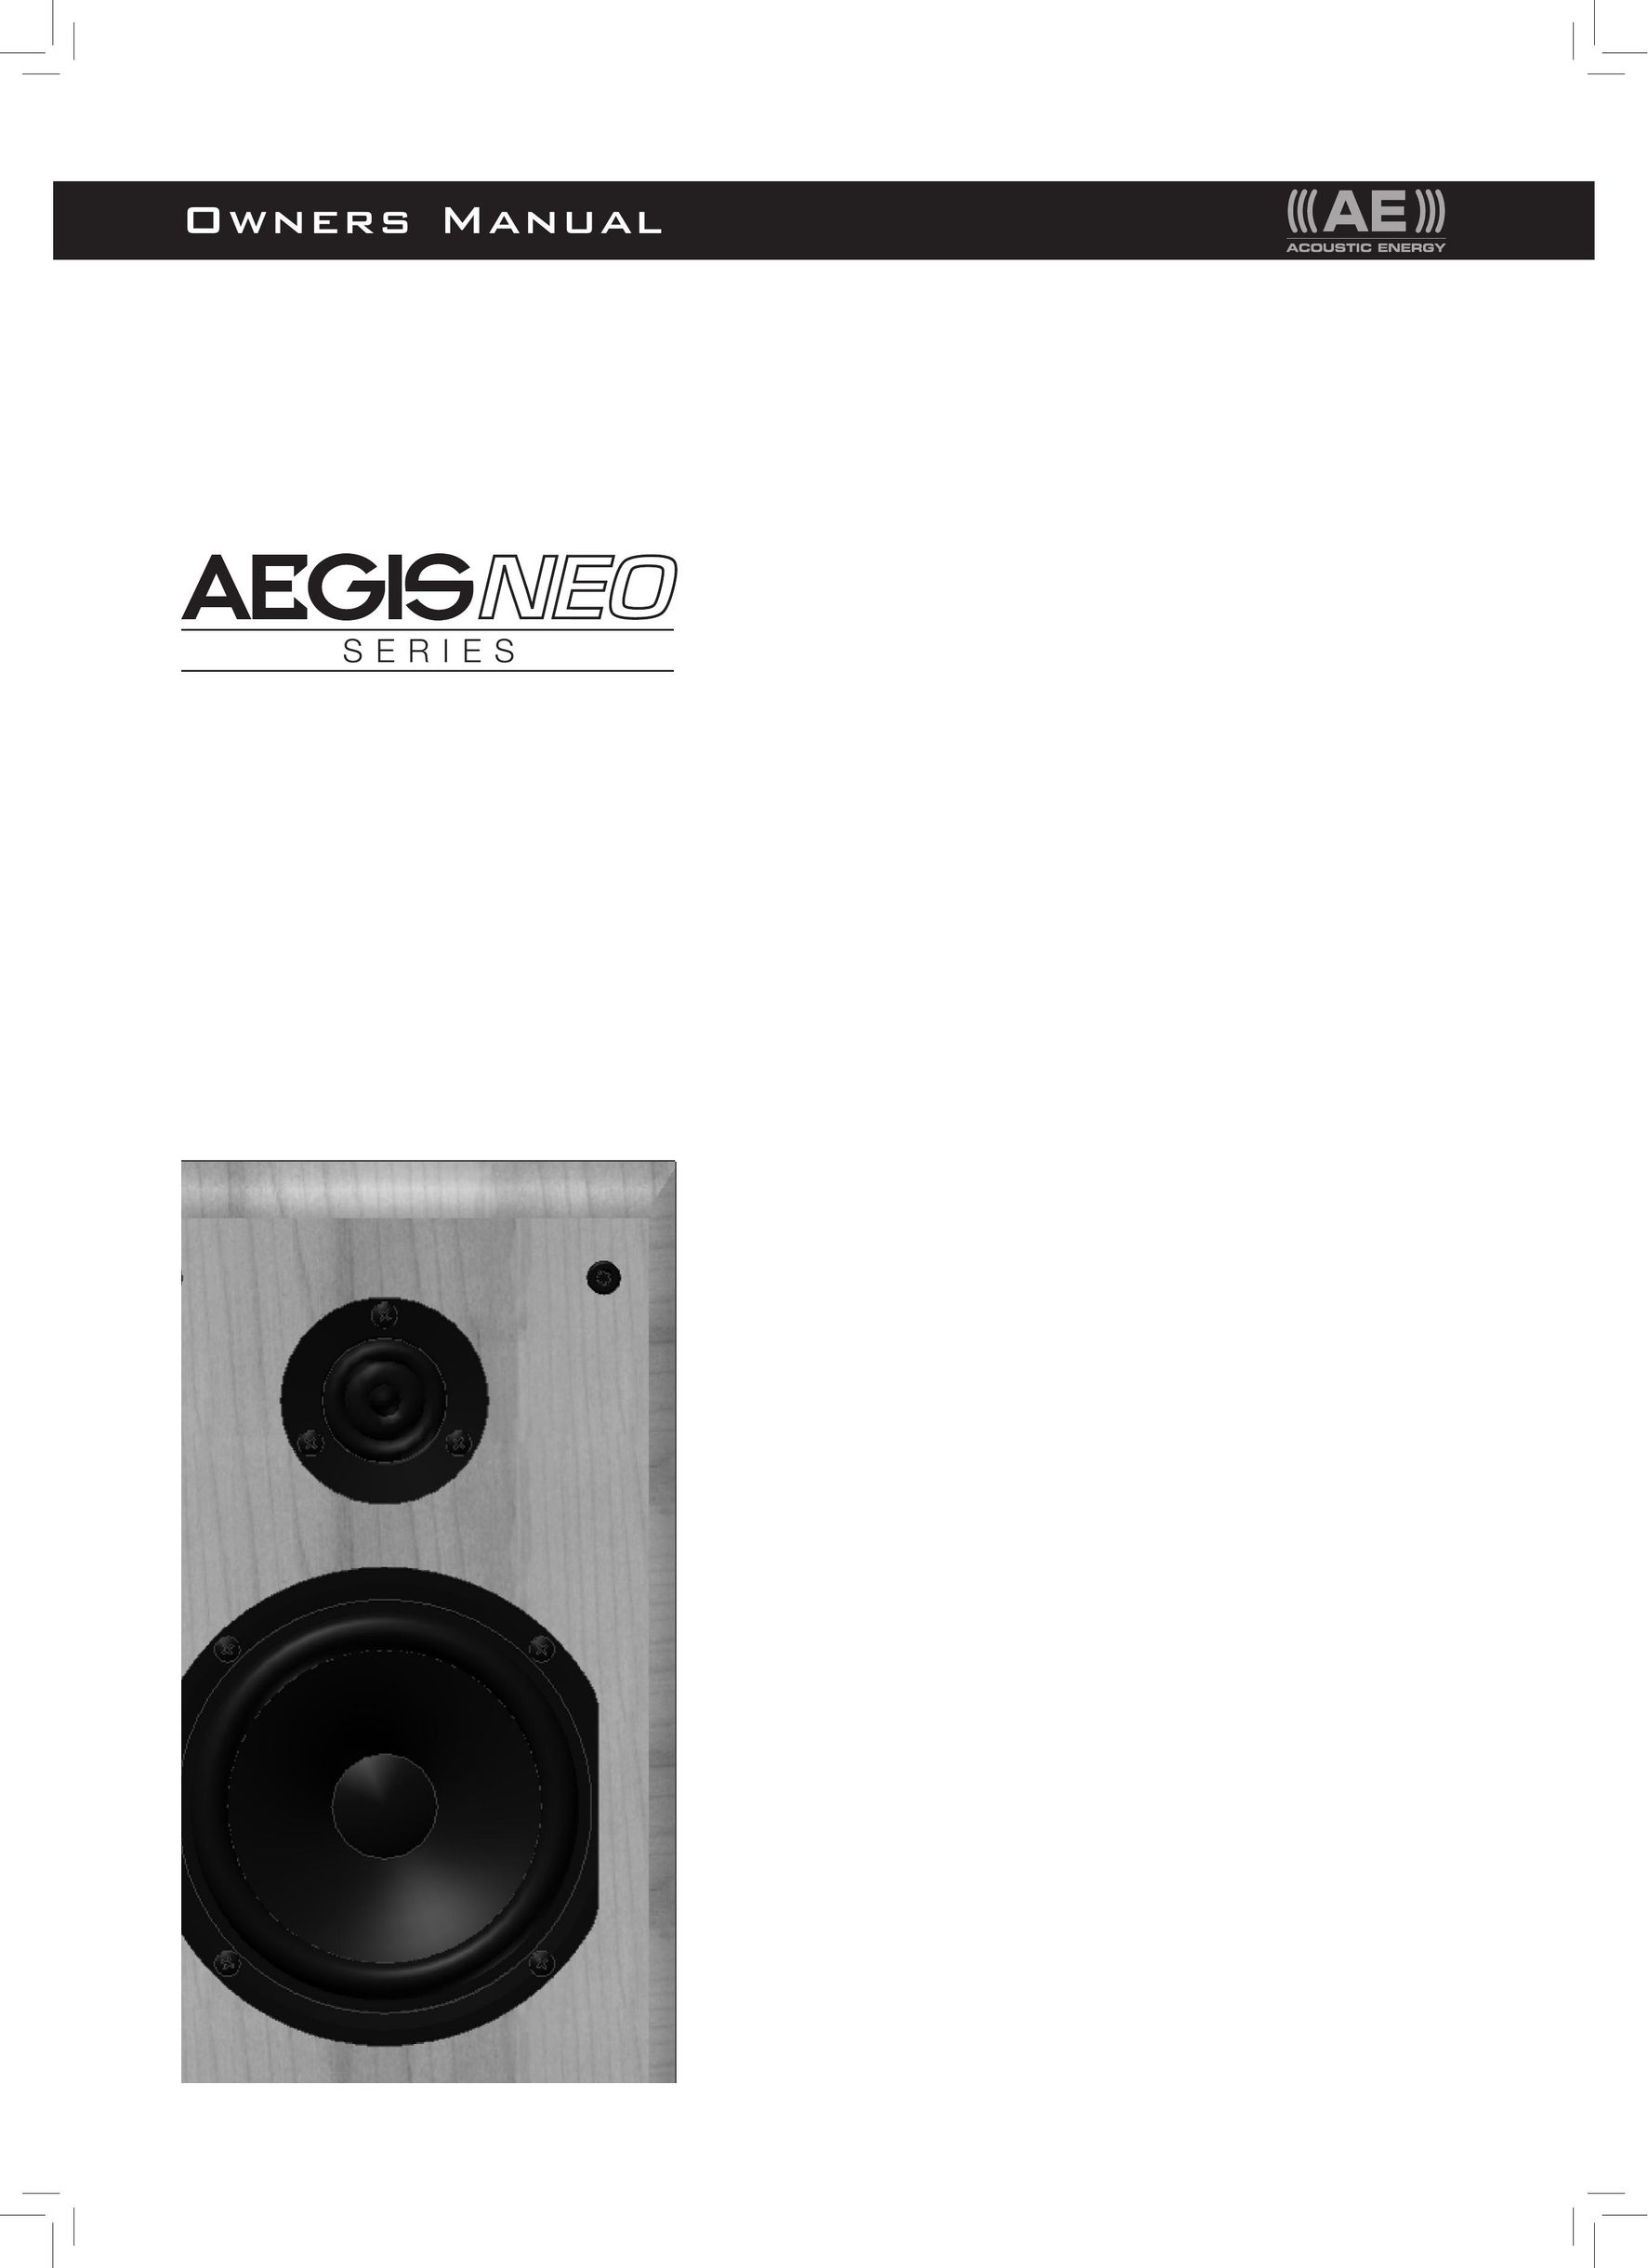 Aegis Micro AegisNeo Series Home Theater System User Manual